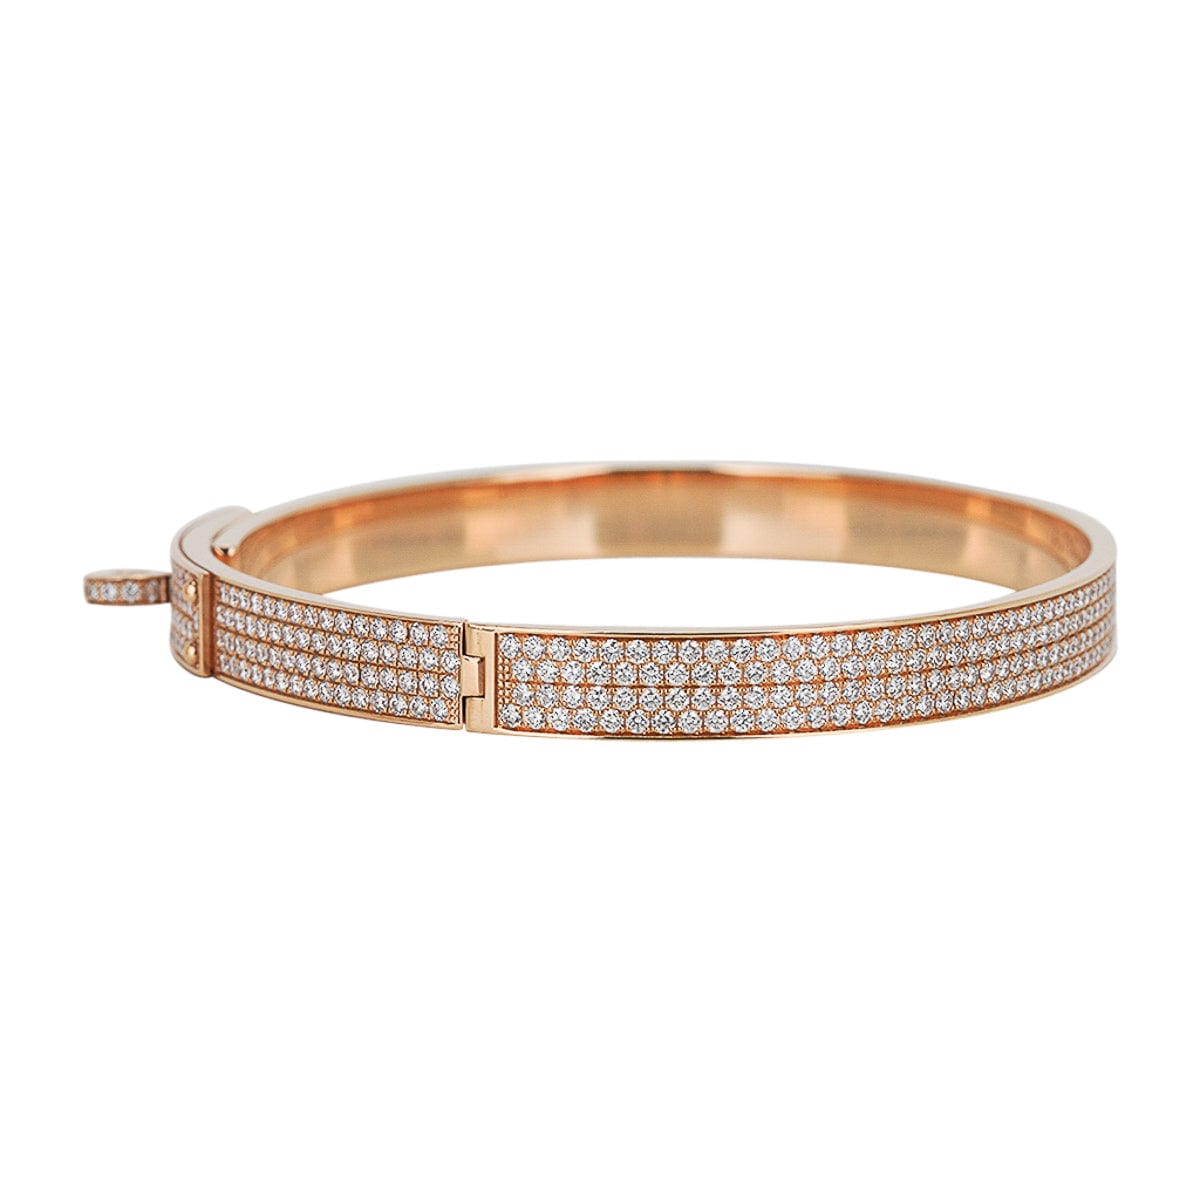 Hermes Kelly Diamond Bracelet 18k Yellow Gold 539 Diamonds Size Small